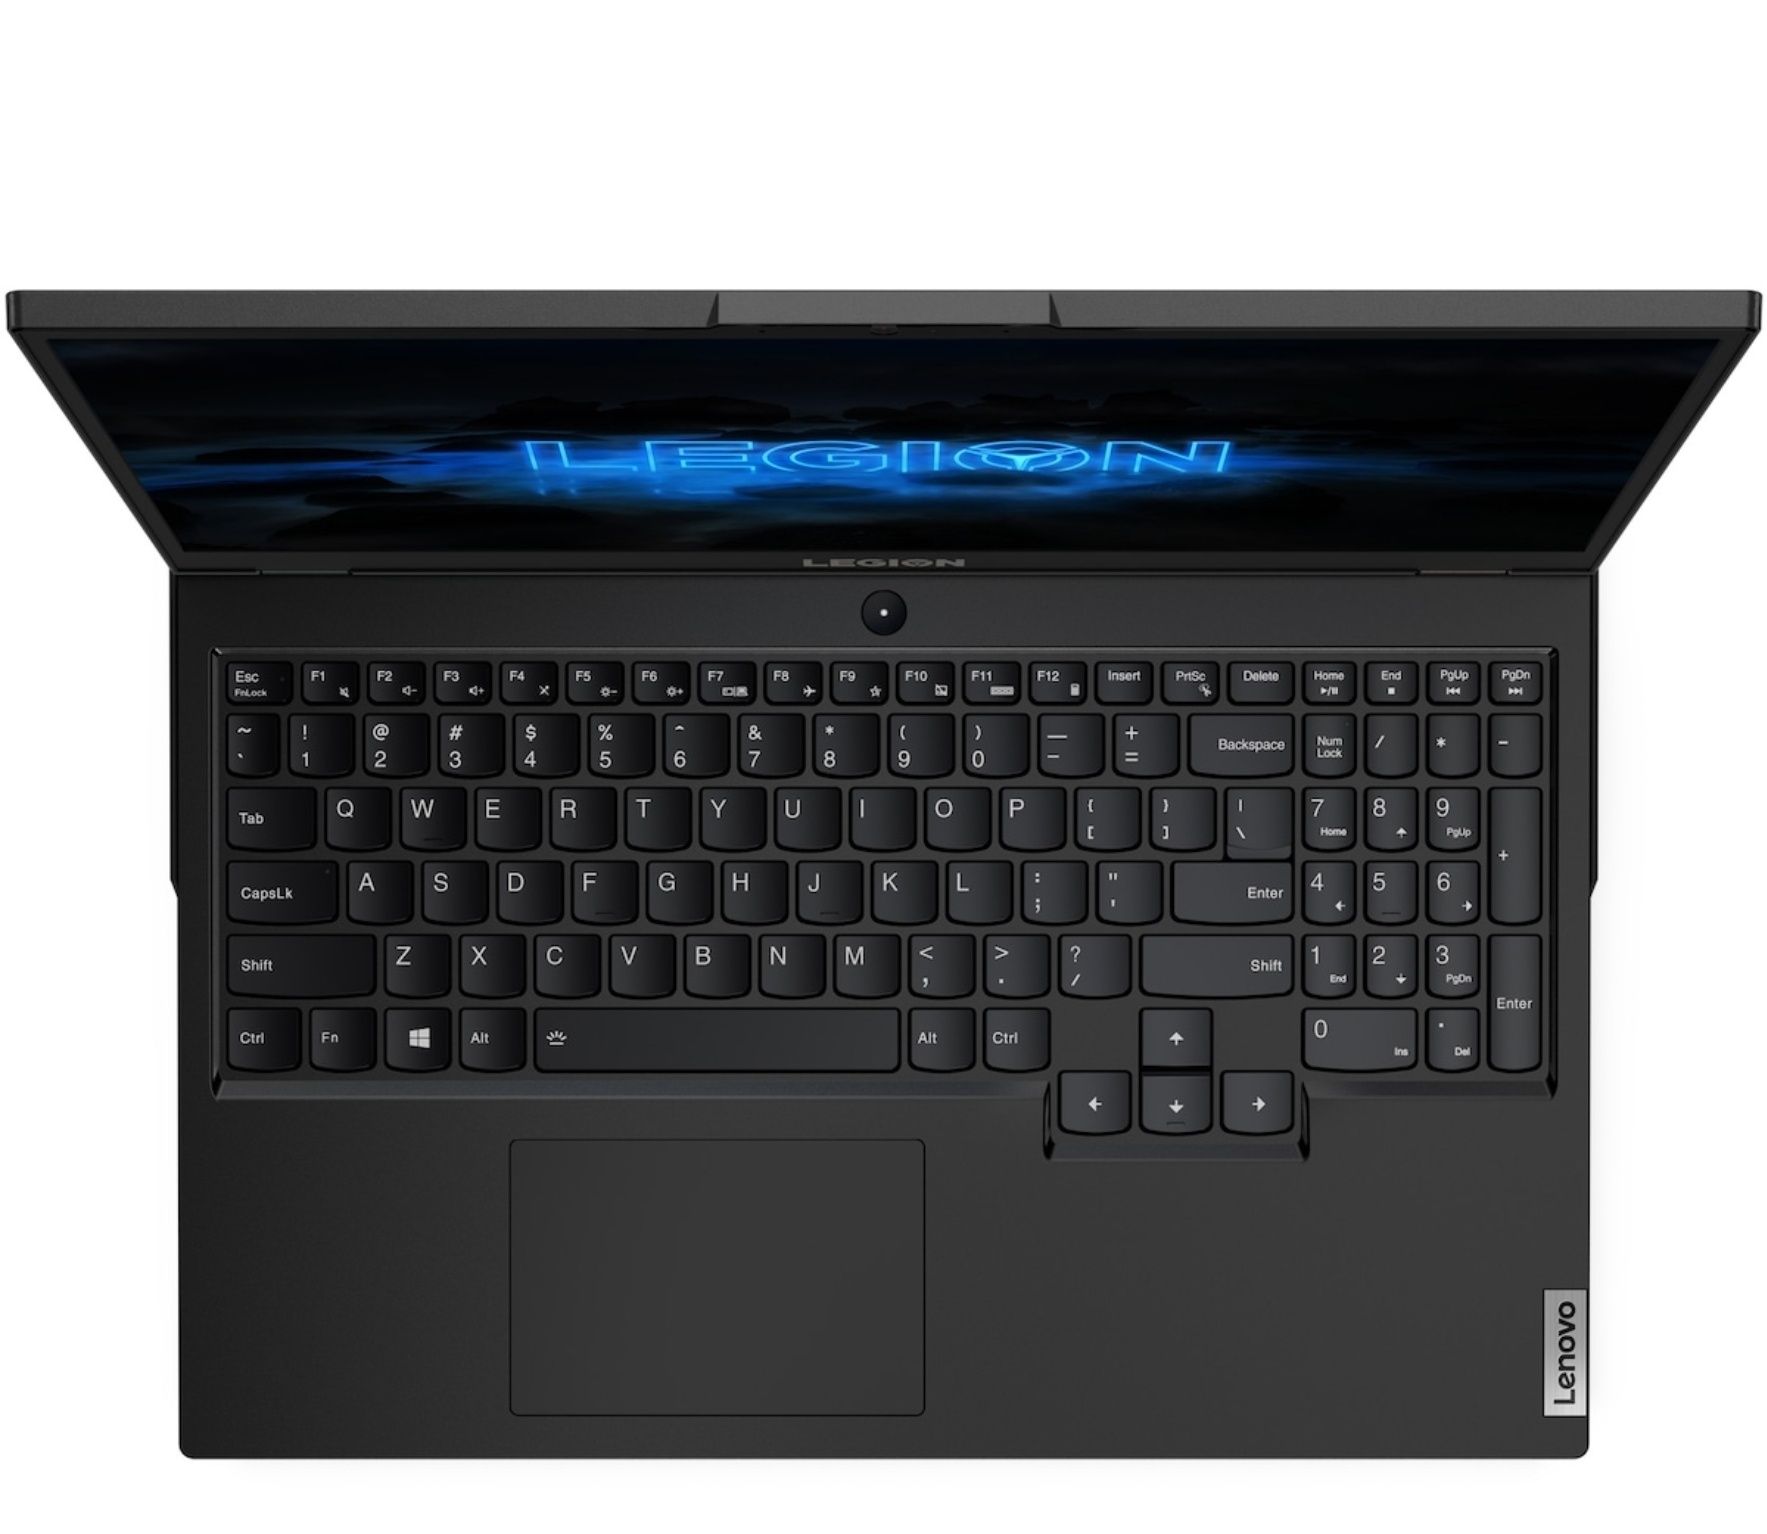 Lenovo Legion 5 - laptop gaming - 144Hz - GTX 1650 - 512GB SSD - 16GB